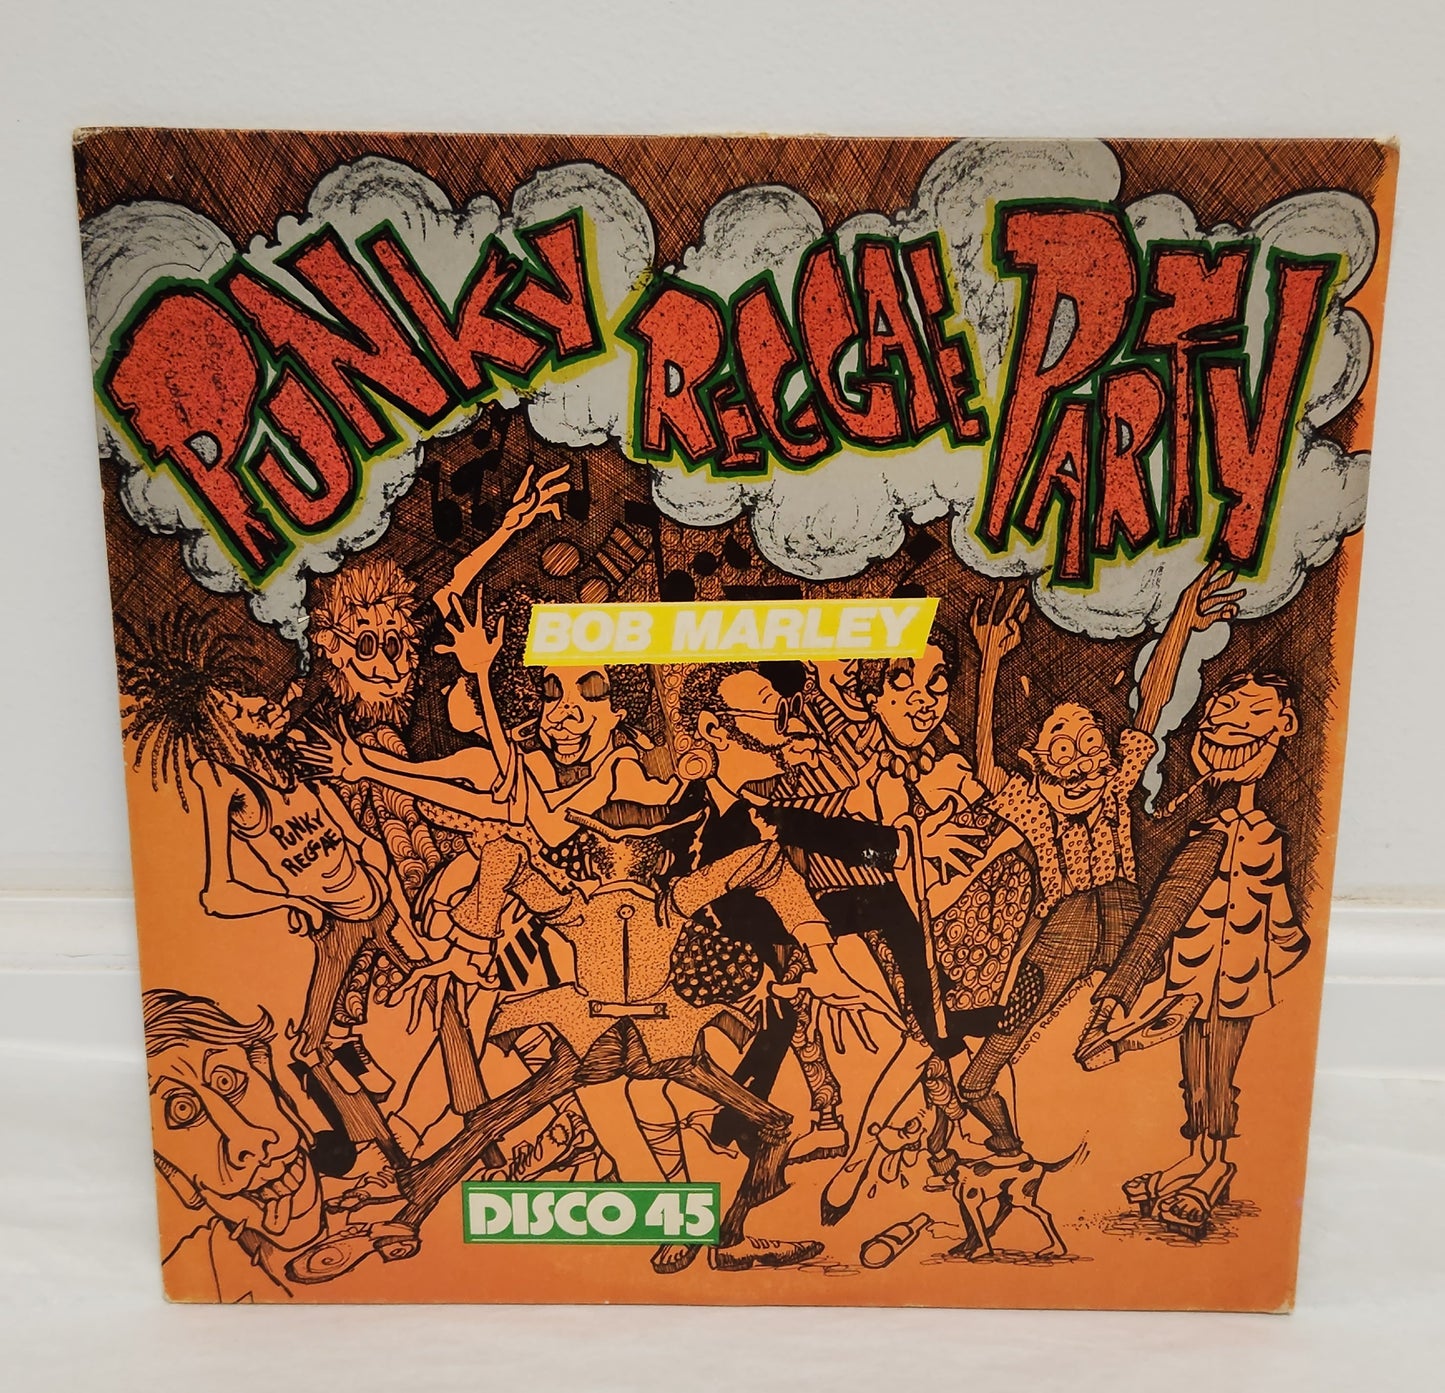 Bob Marley "Punky Reggae Party" 45 RPM Reggae Album Single